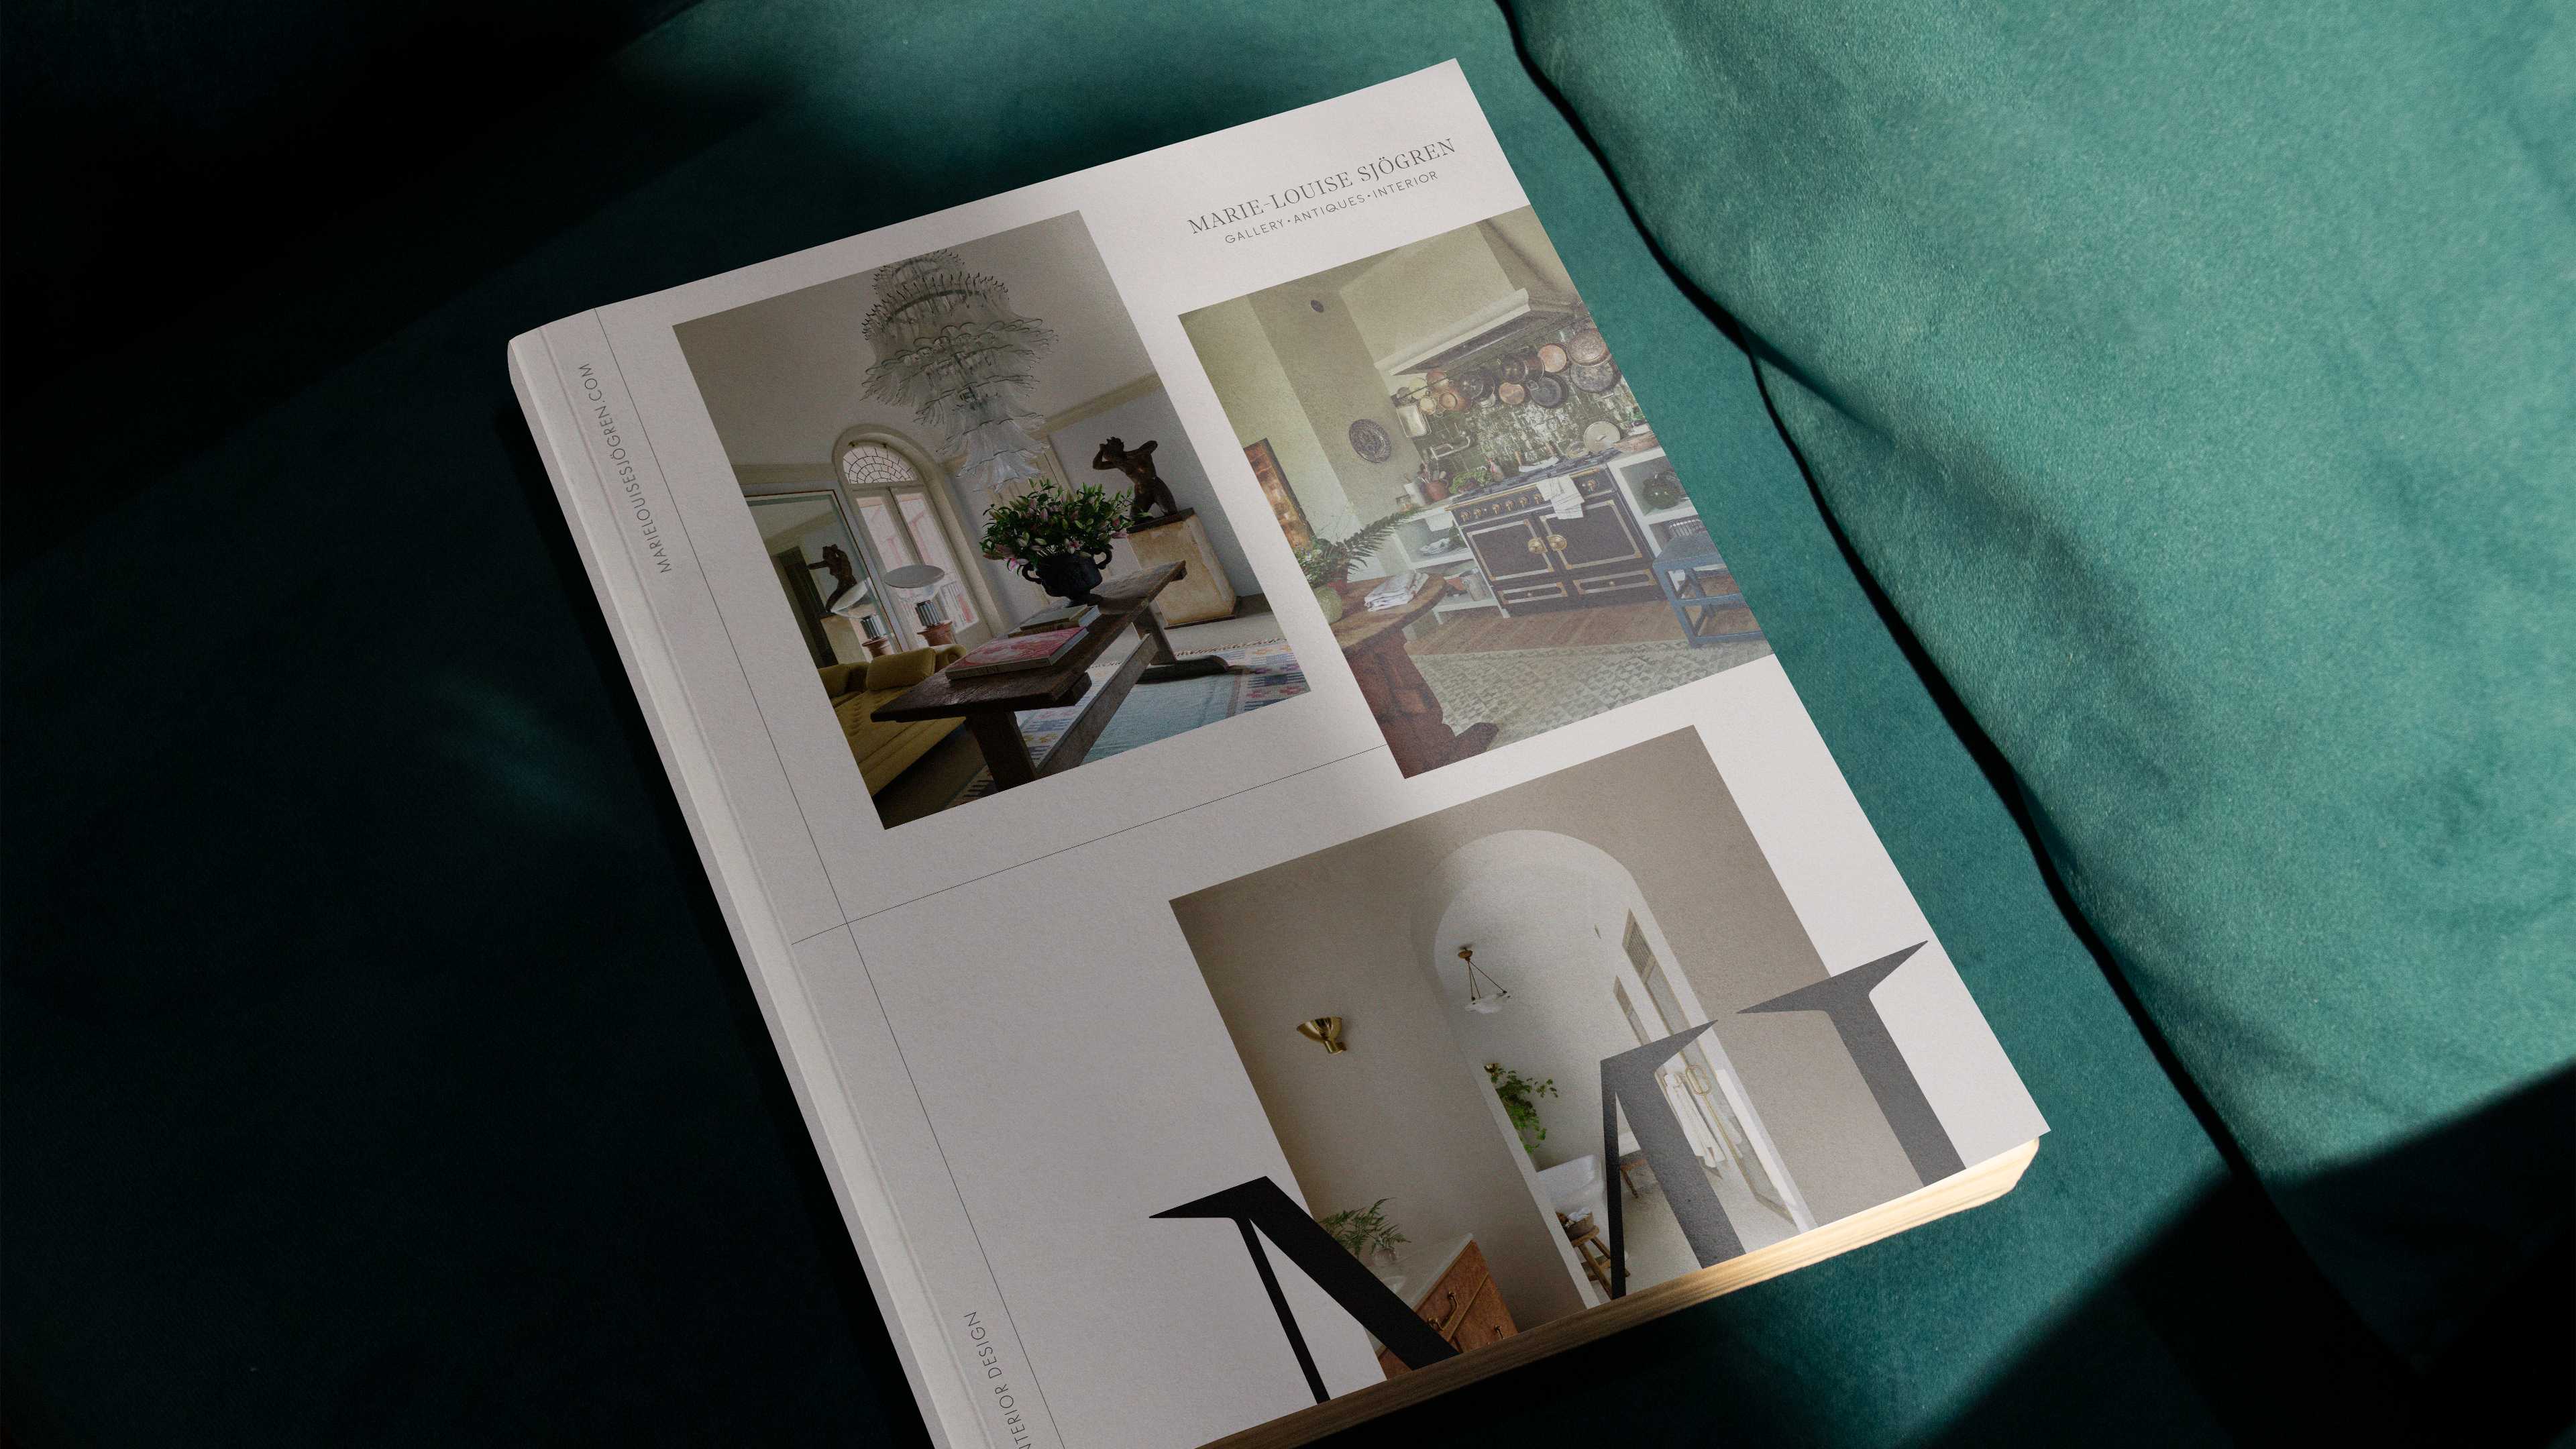 Catalogue for Marie-Louise Sjögren designed by Studio Poi